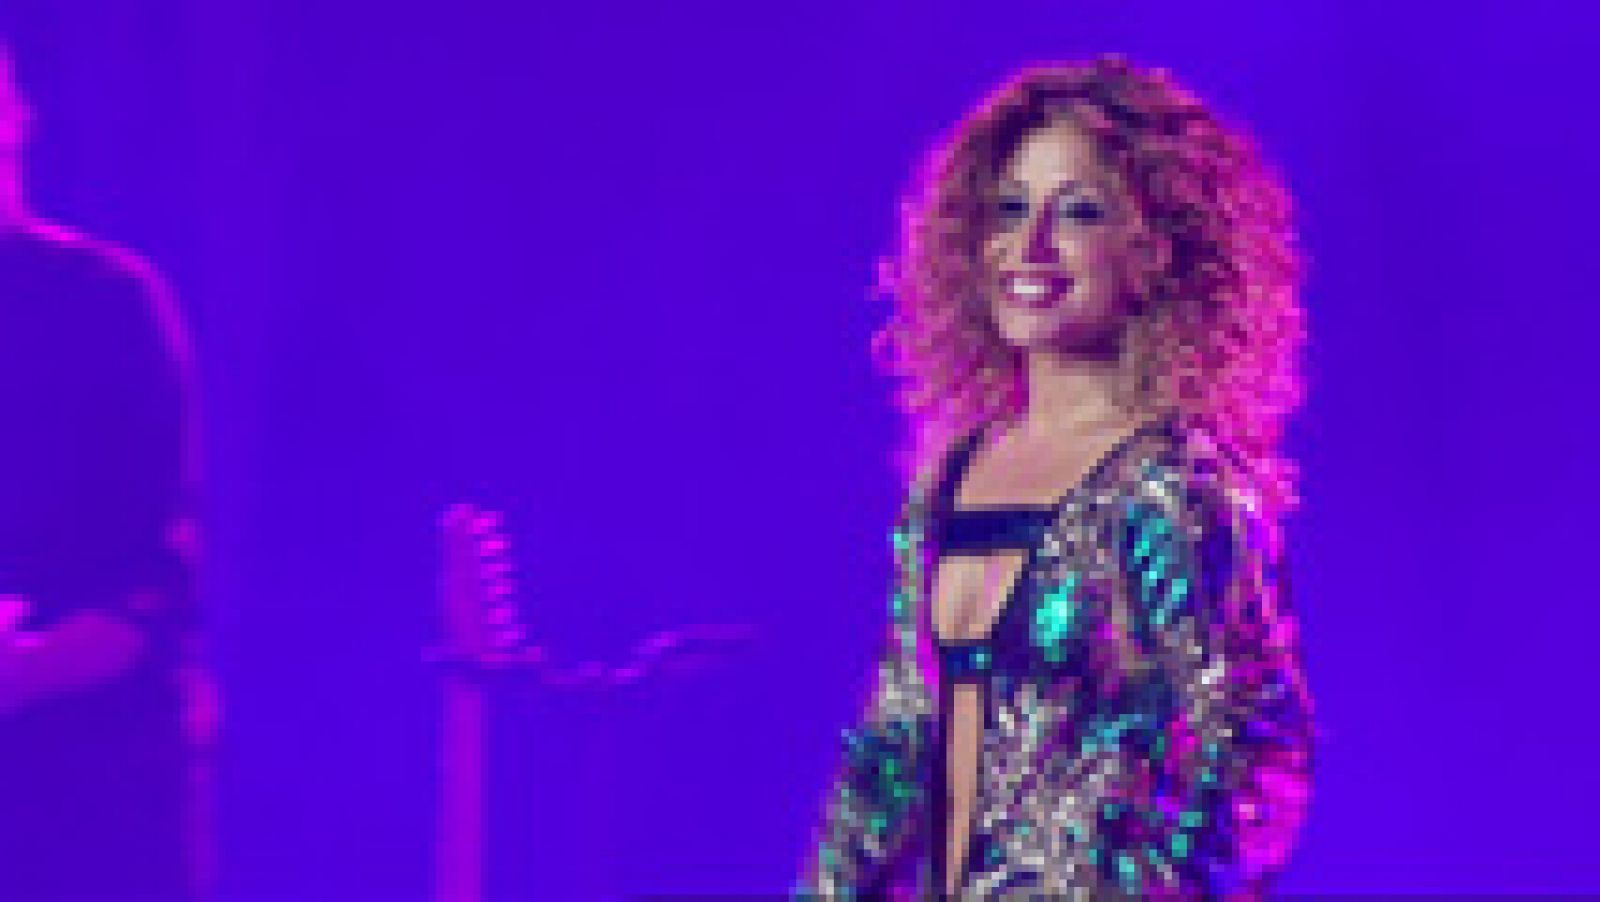 OT. El reencuentro: Verónica canta 'Bésame' en el concierto de OT | RTVE Play